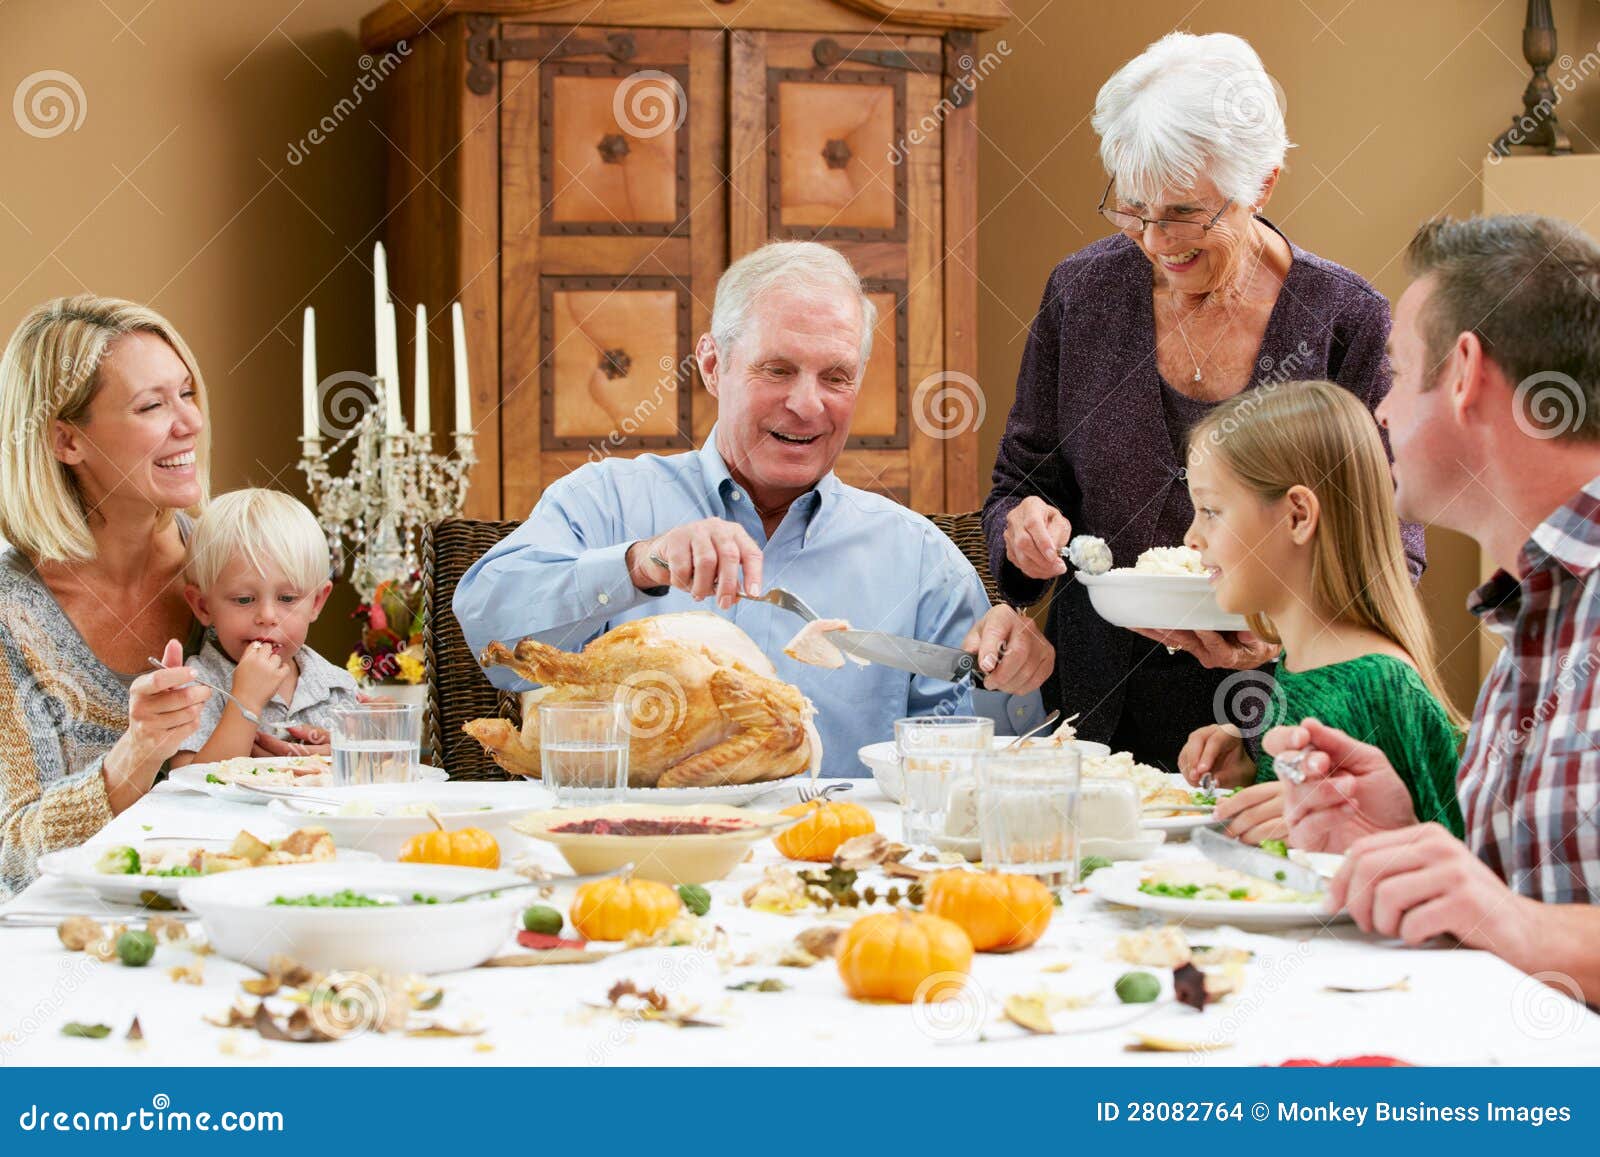 multi generation family celebrating thanksgiving